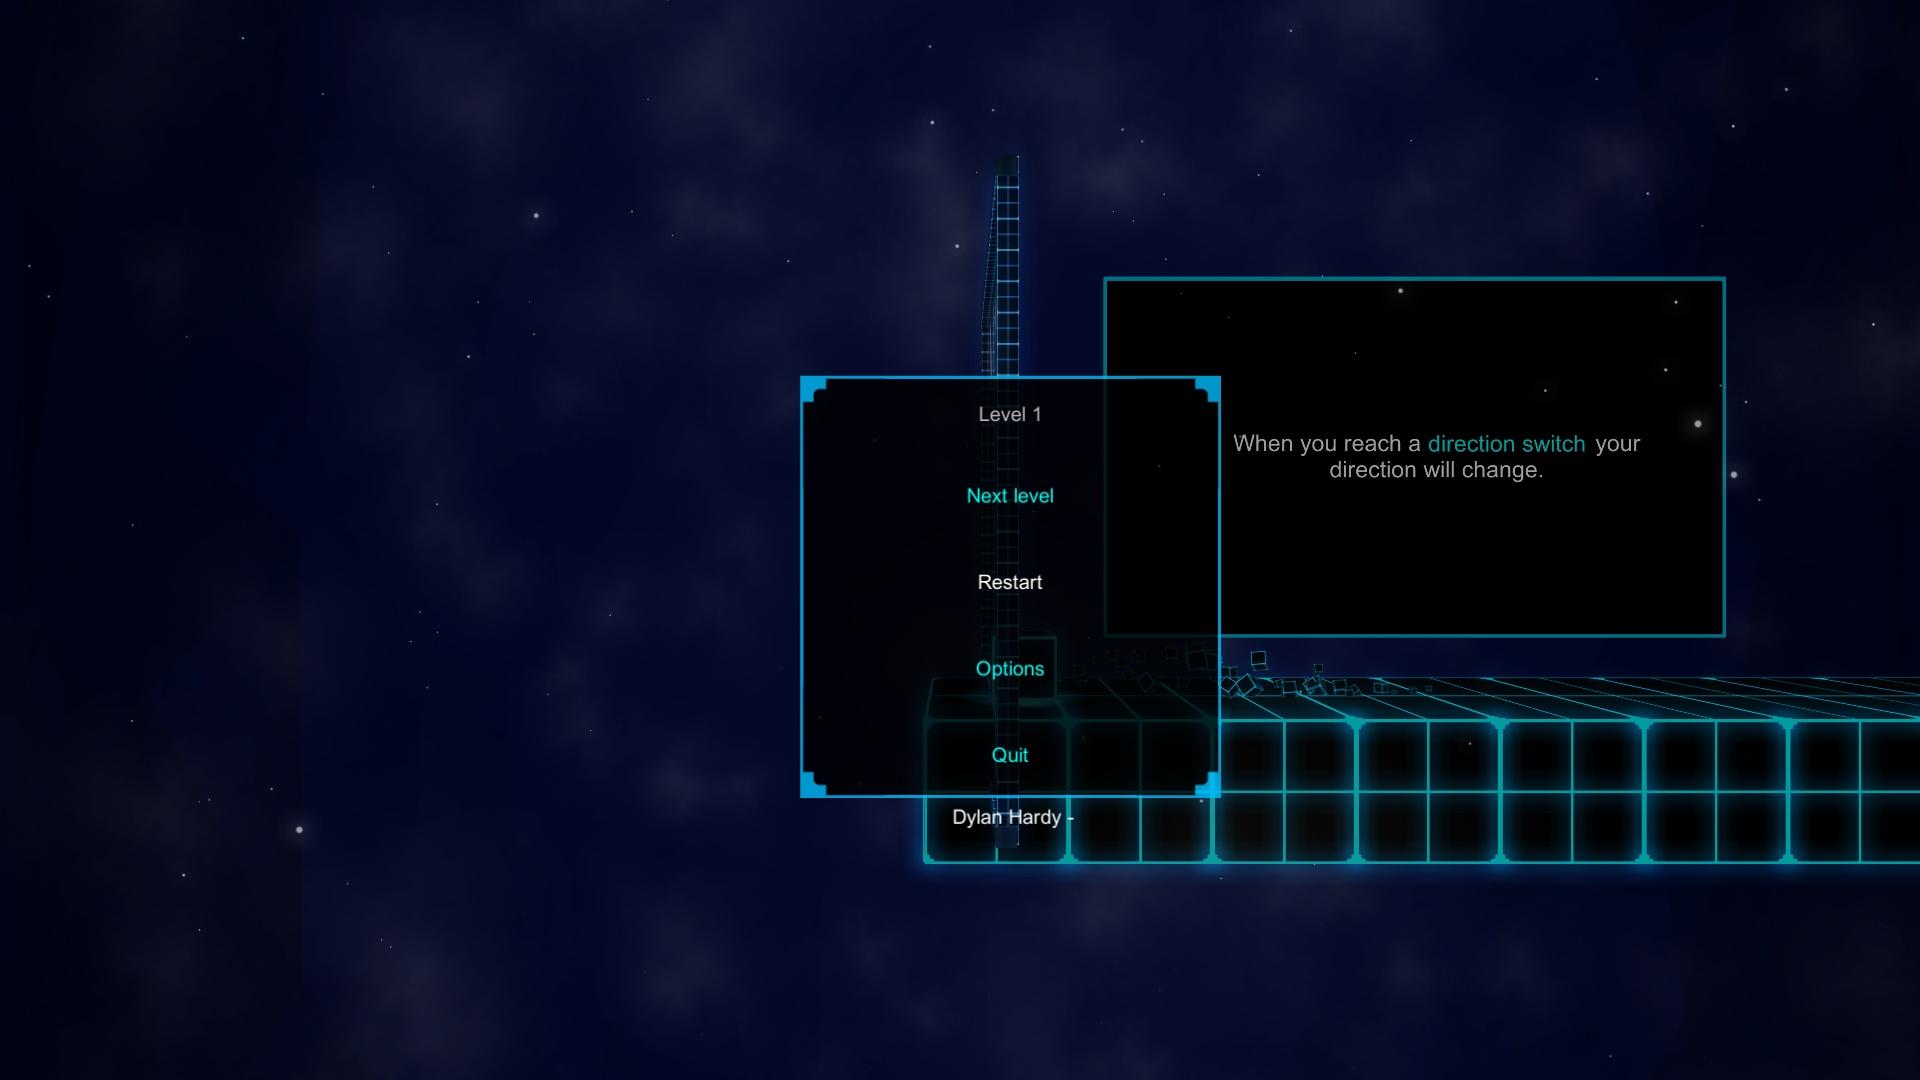 Screenshot №2 from game Cube Runner